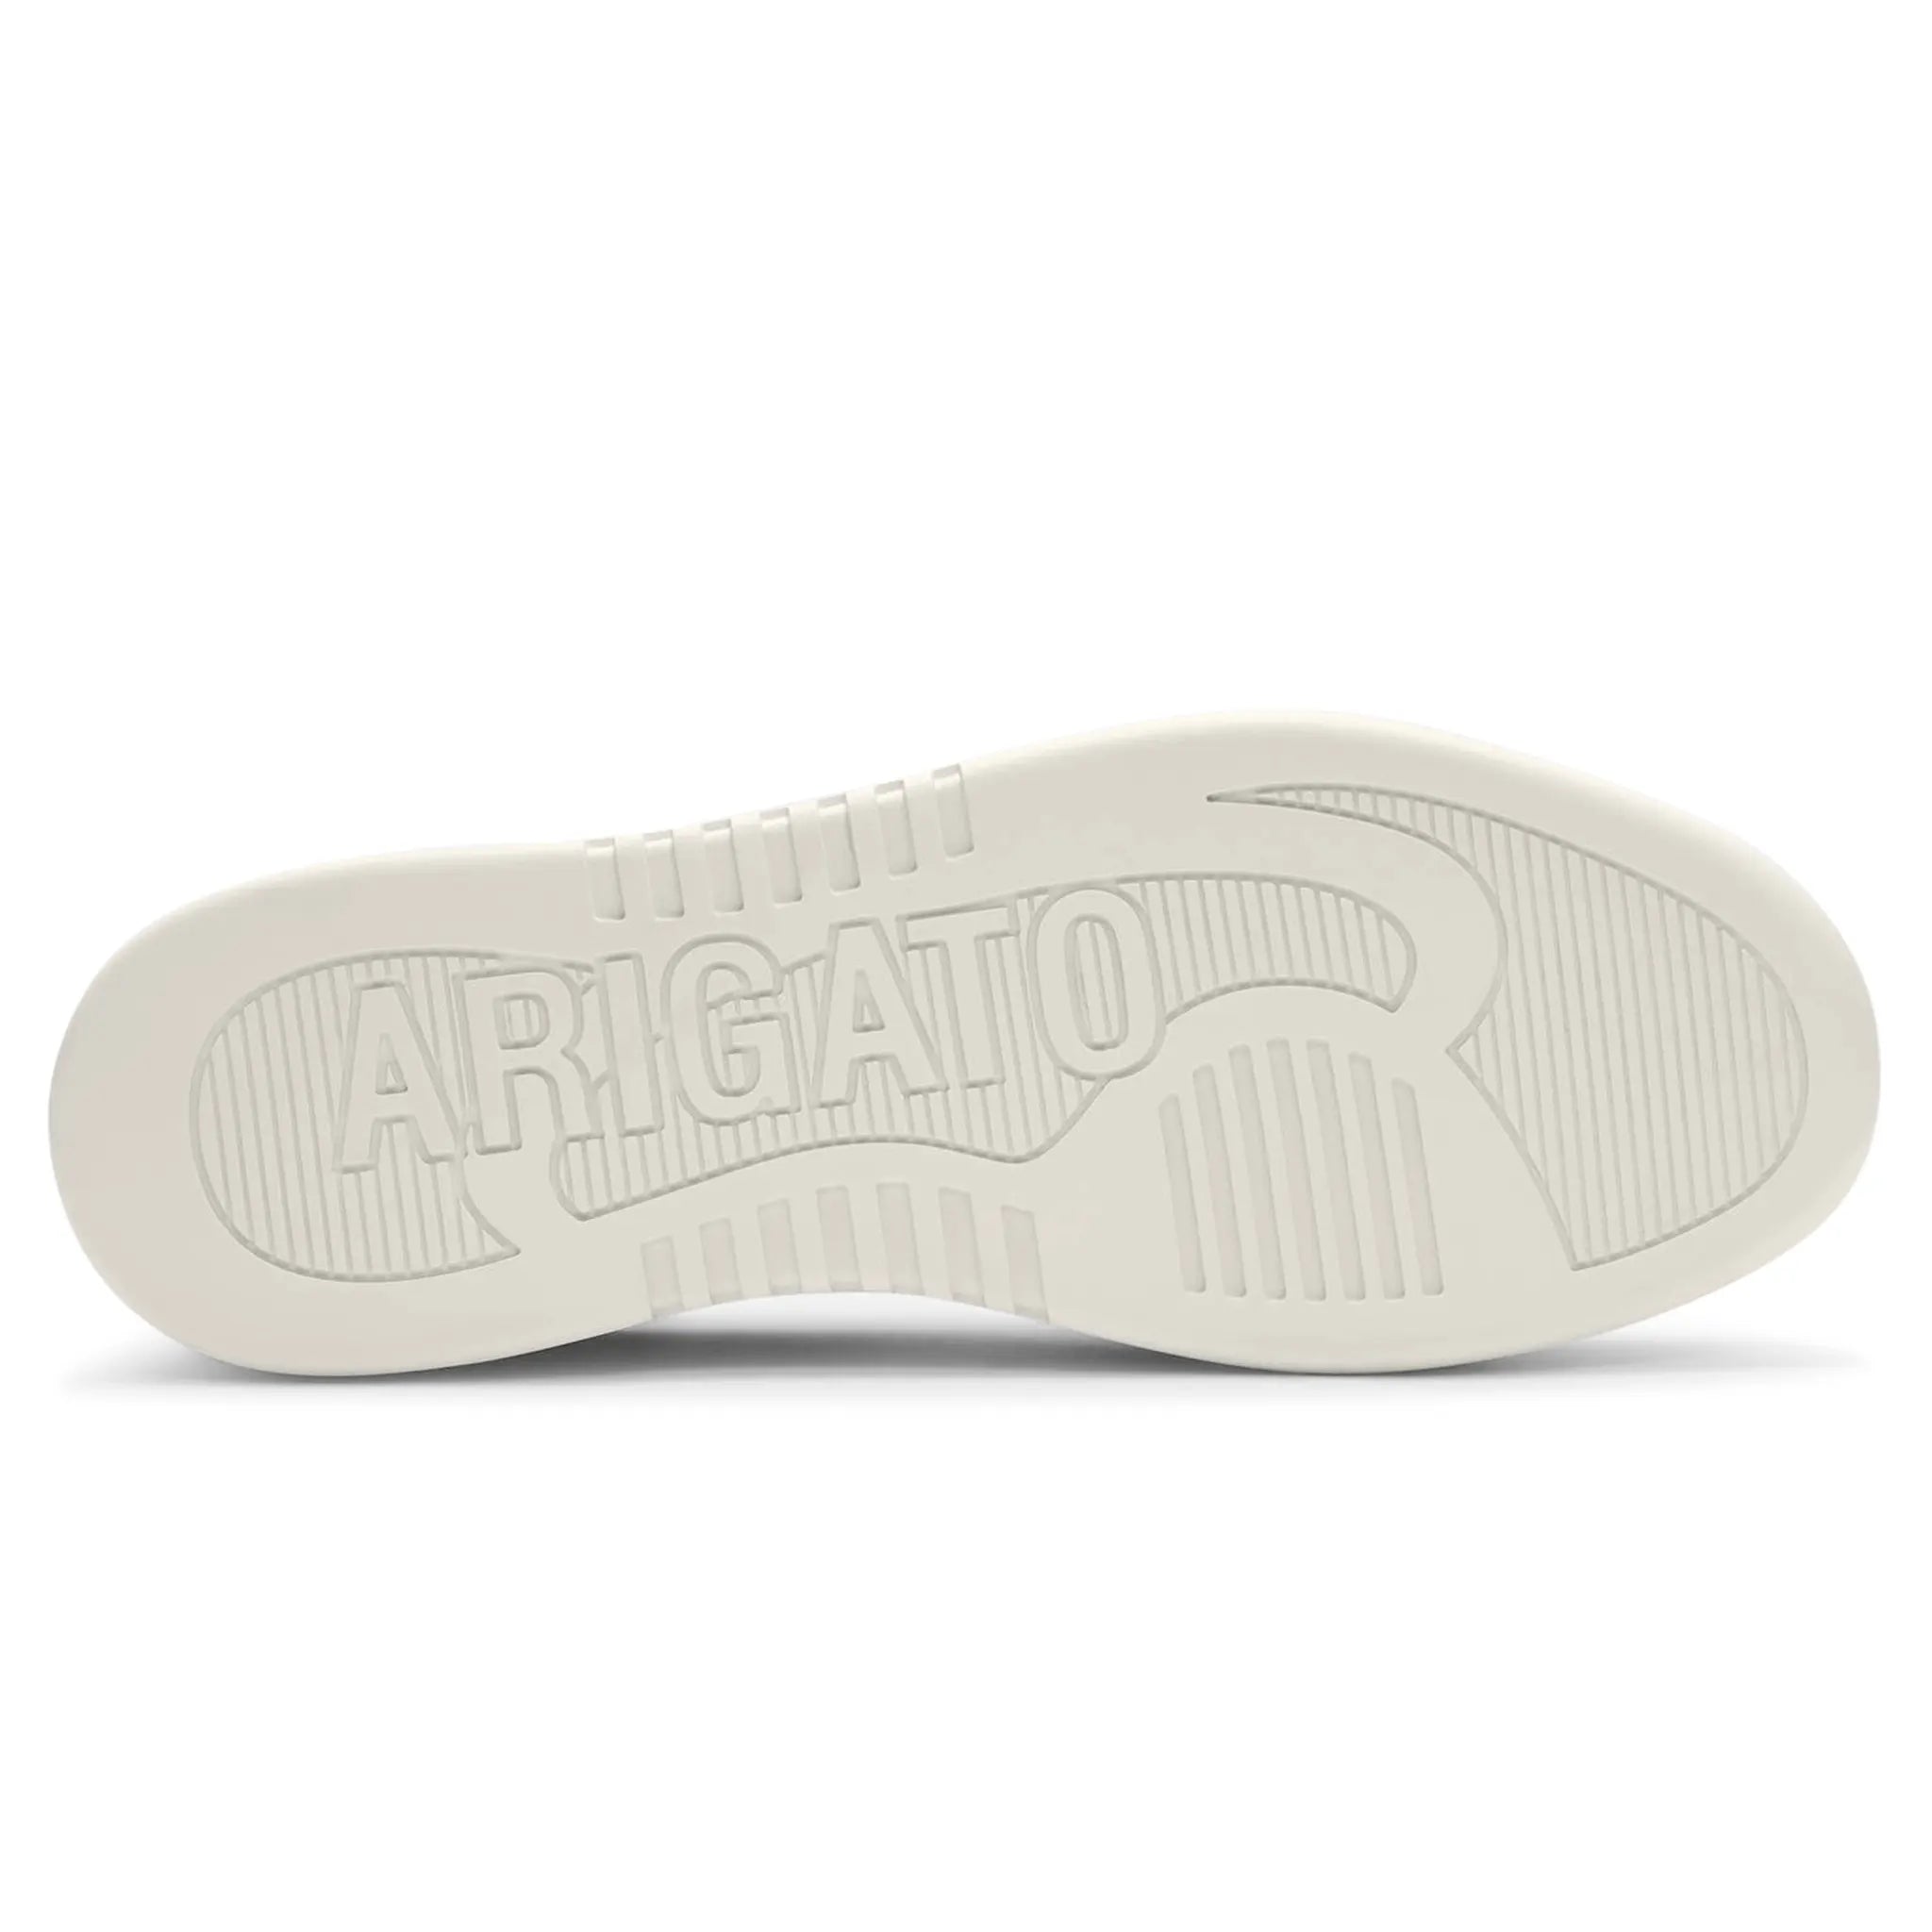 Sole view of Axel Arigato Dice Low Beige Black Sneaker F1697004